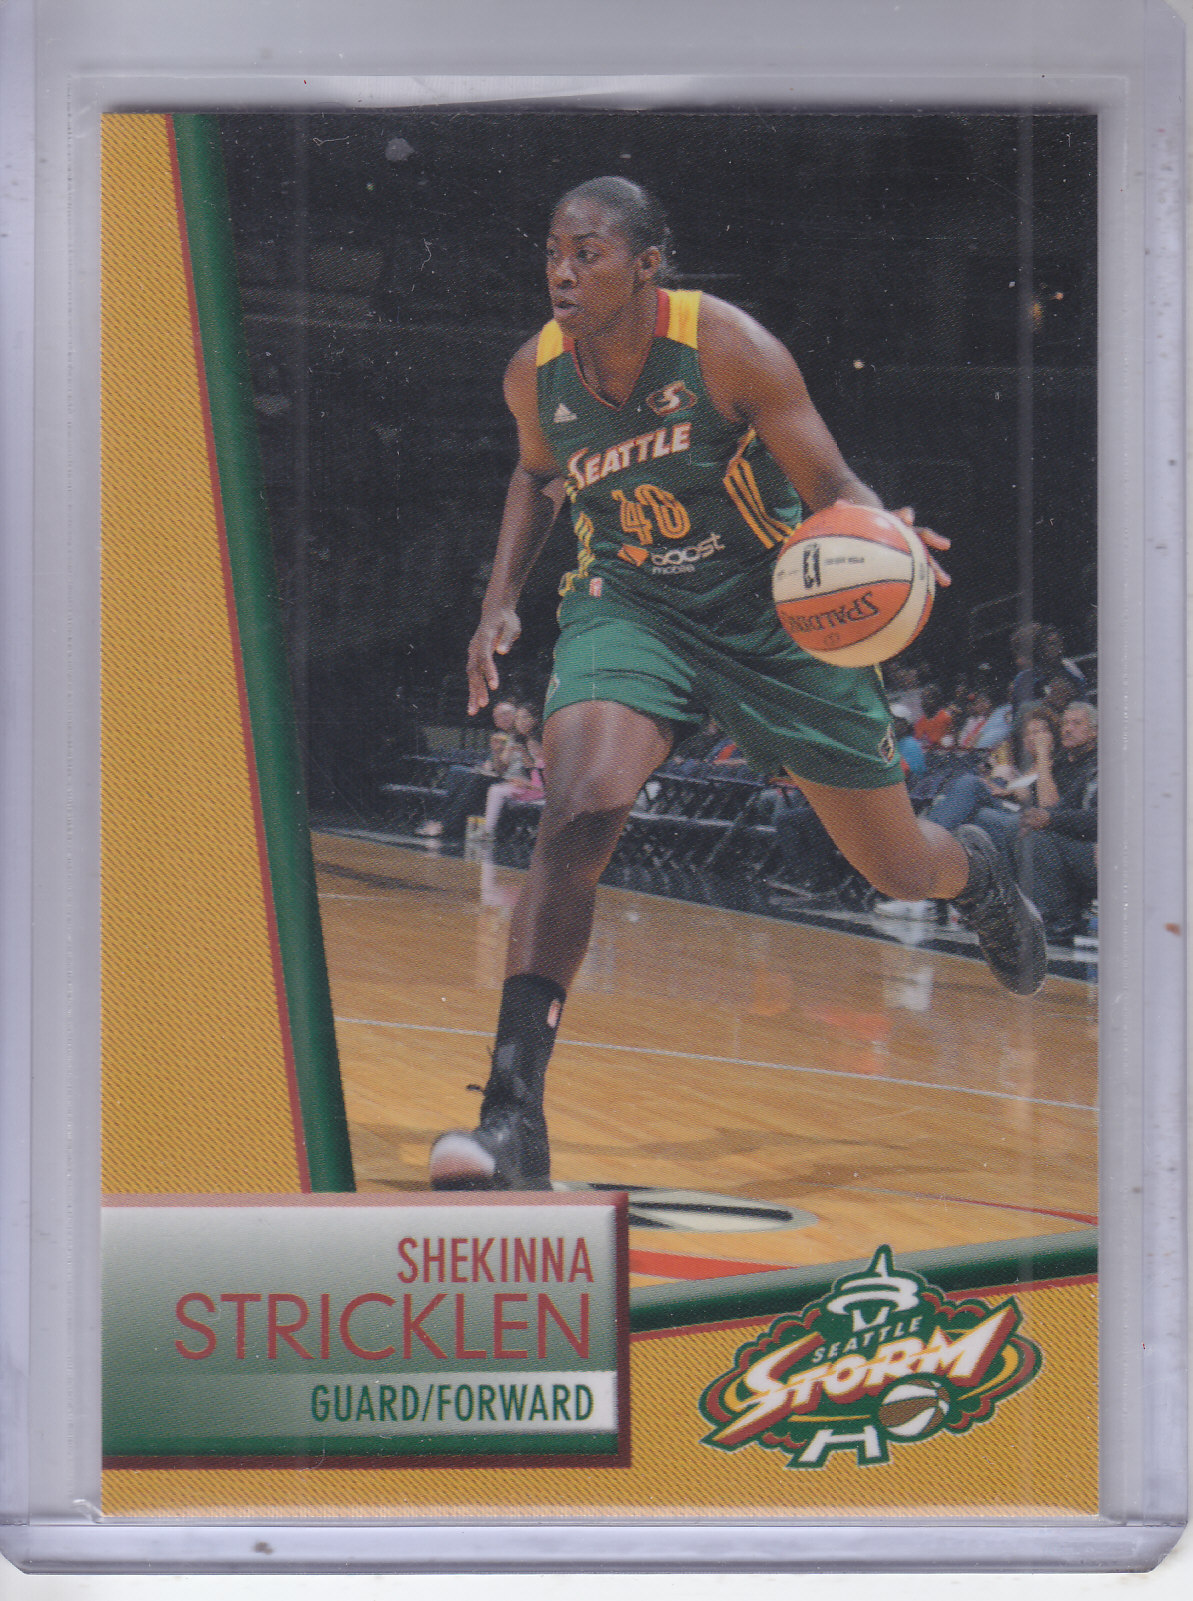  Shekinna Stricklen player image